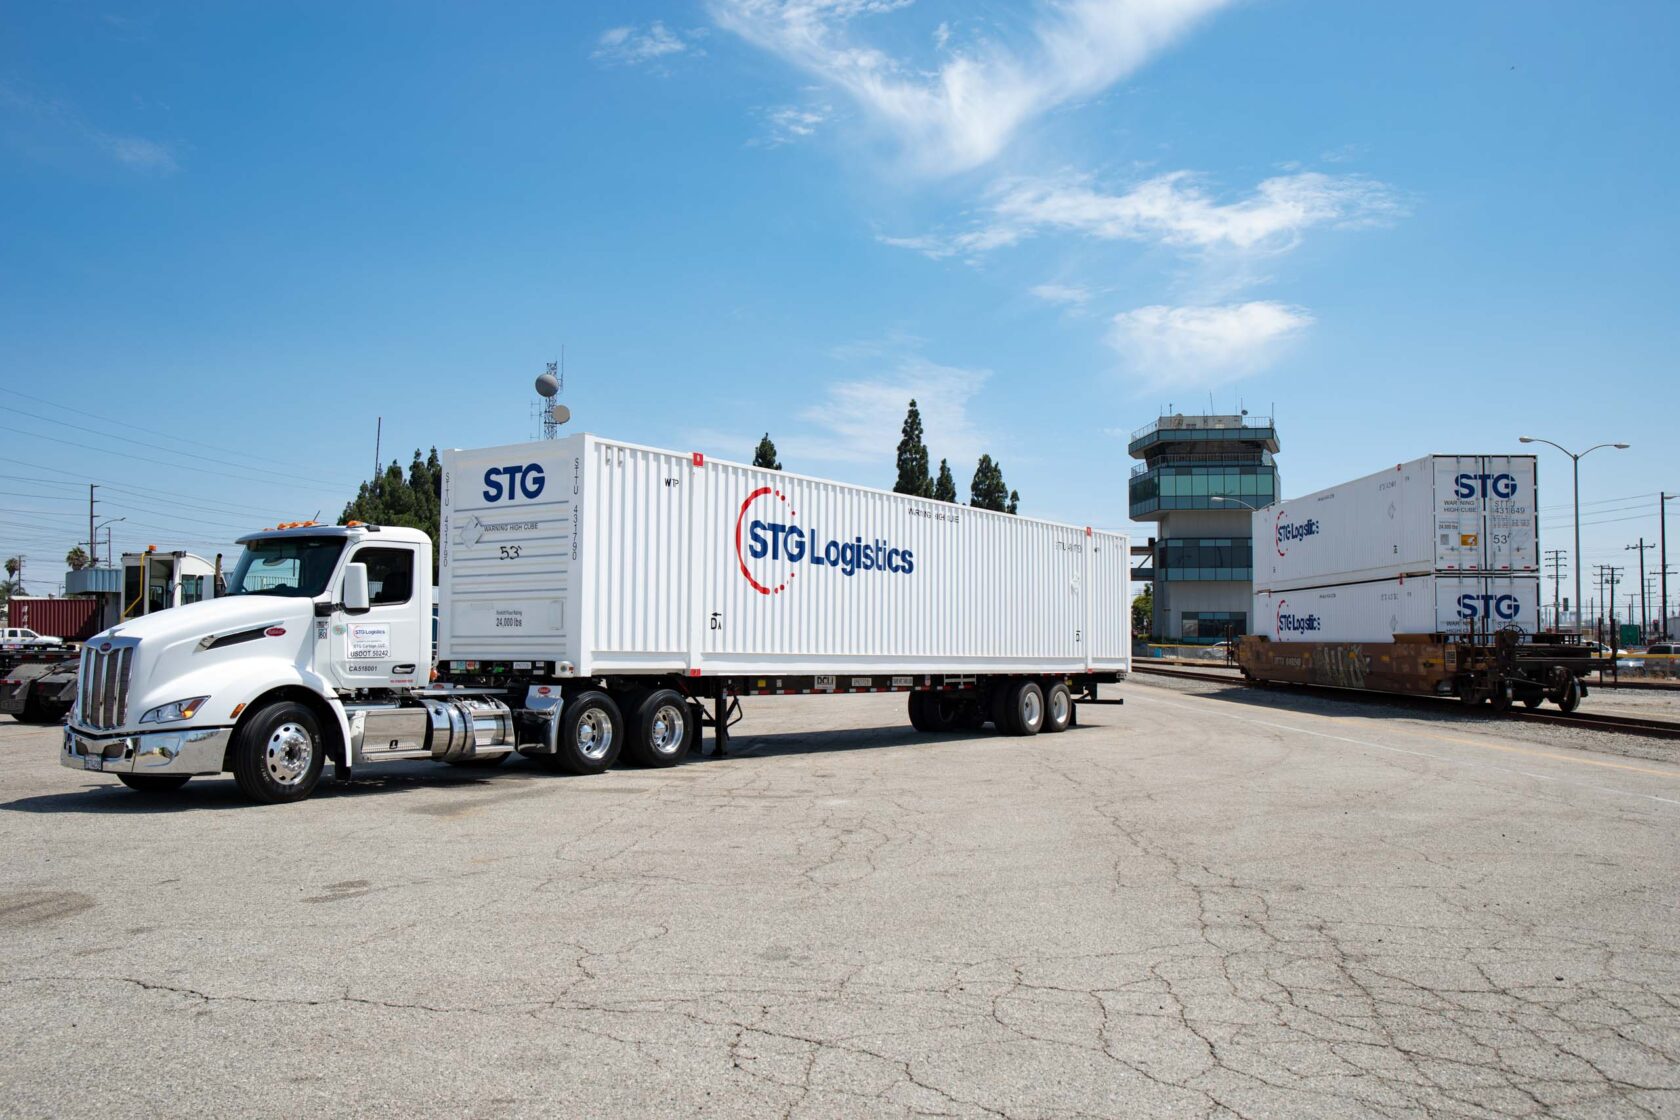 STG logistics truck and train.